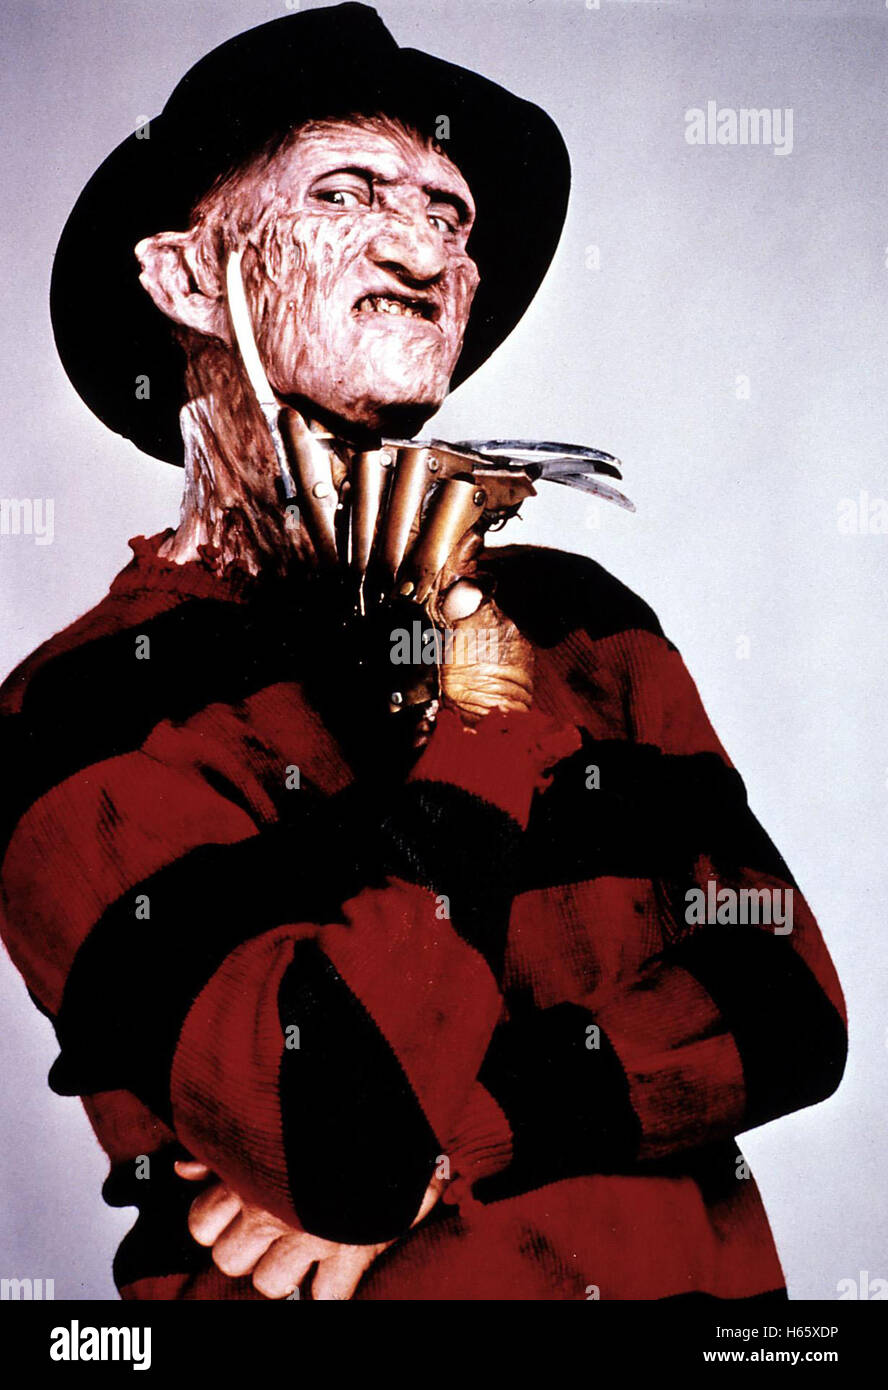 Cauchemar - Mörderische Träume,USA 1984 aka. A Nightmare on Elm Street, Directeur : Wes Craven, acteurs/Stars : Heather M. Langenkamp, Johnny Depp, Robert Englund Banque D'Images